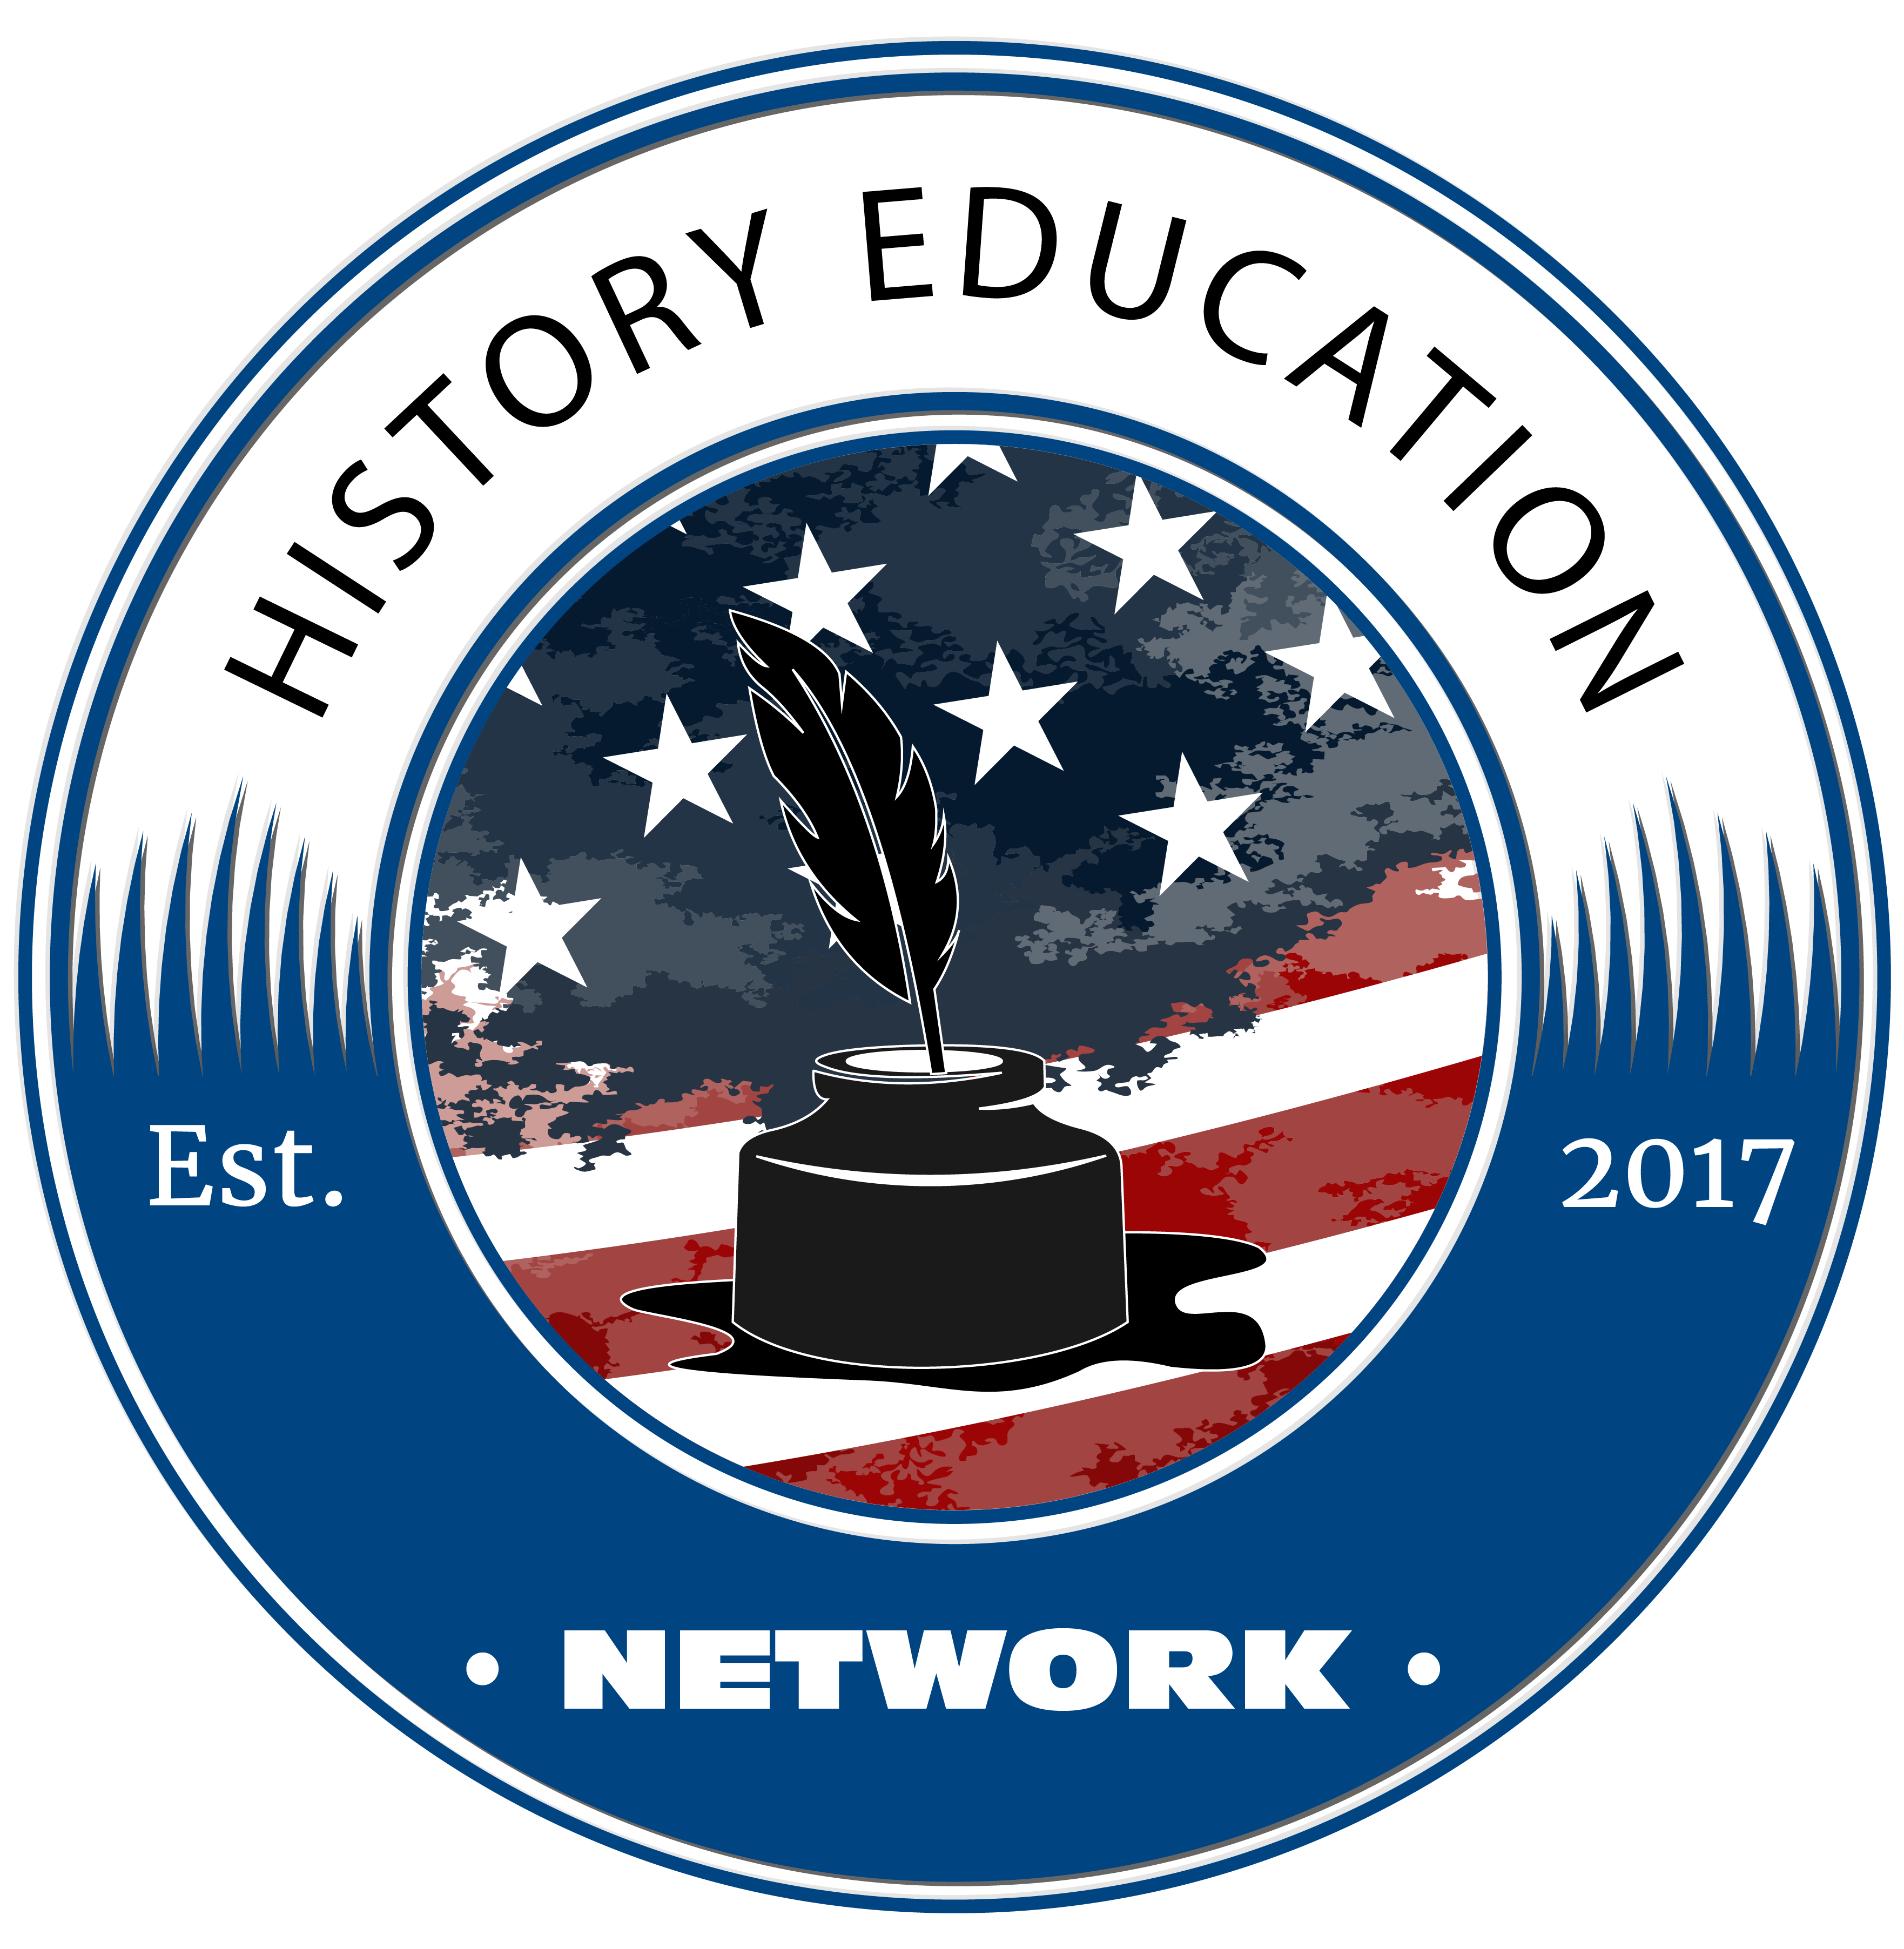 History Education Network logo